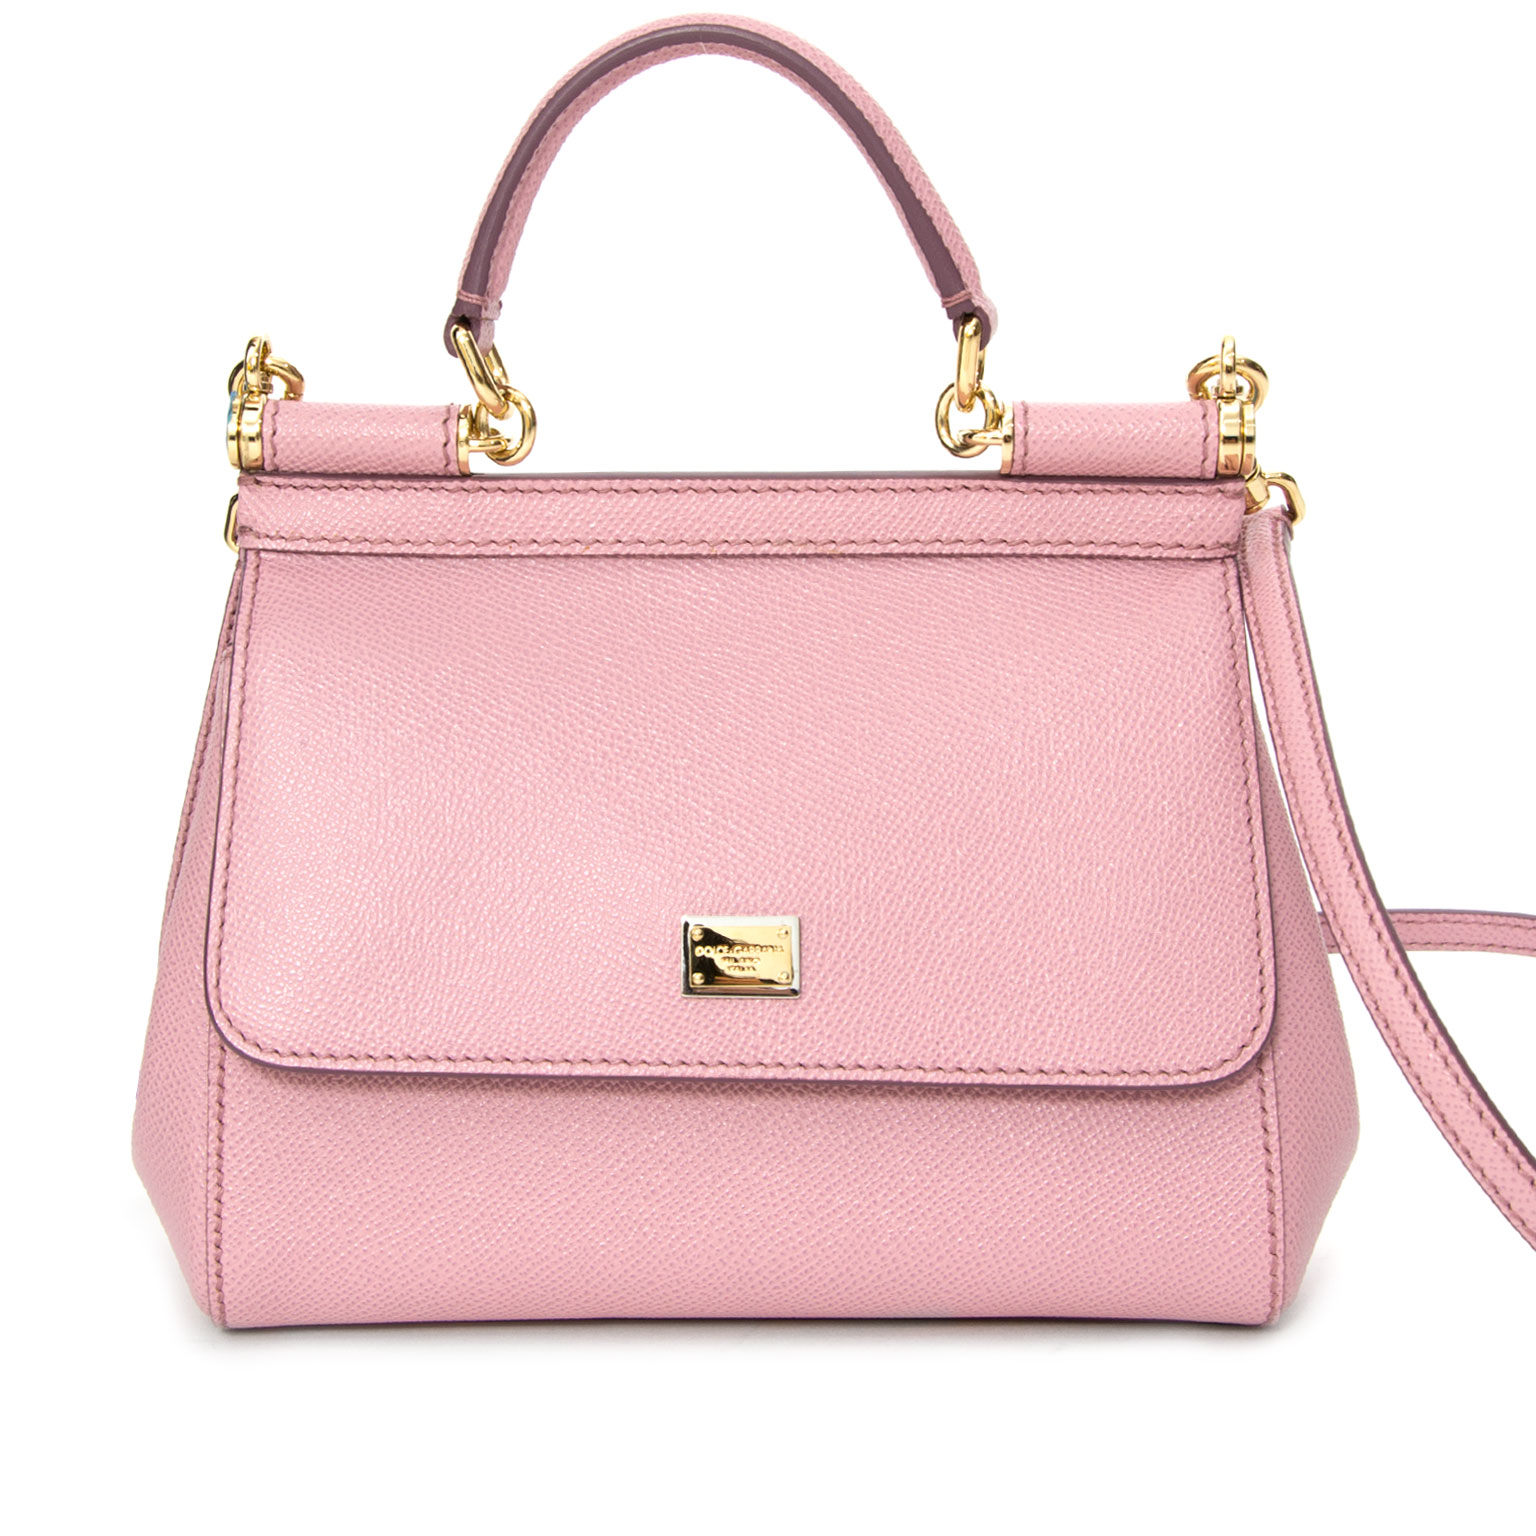 Dolce & Gabbana Pink Medium Miss Sicily Bag, RegalFille